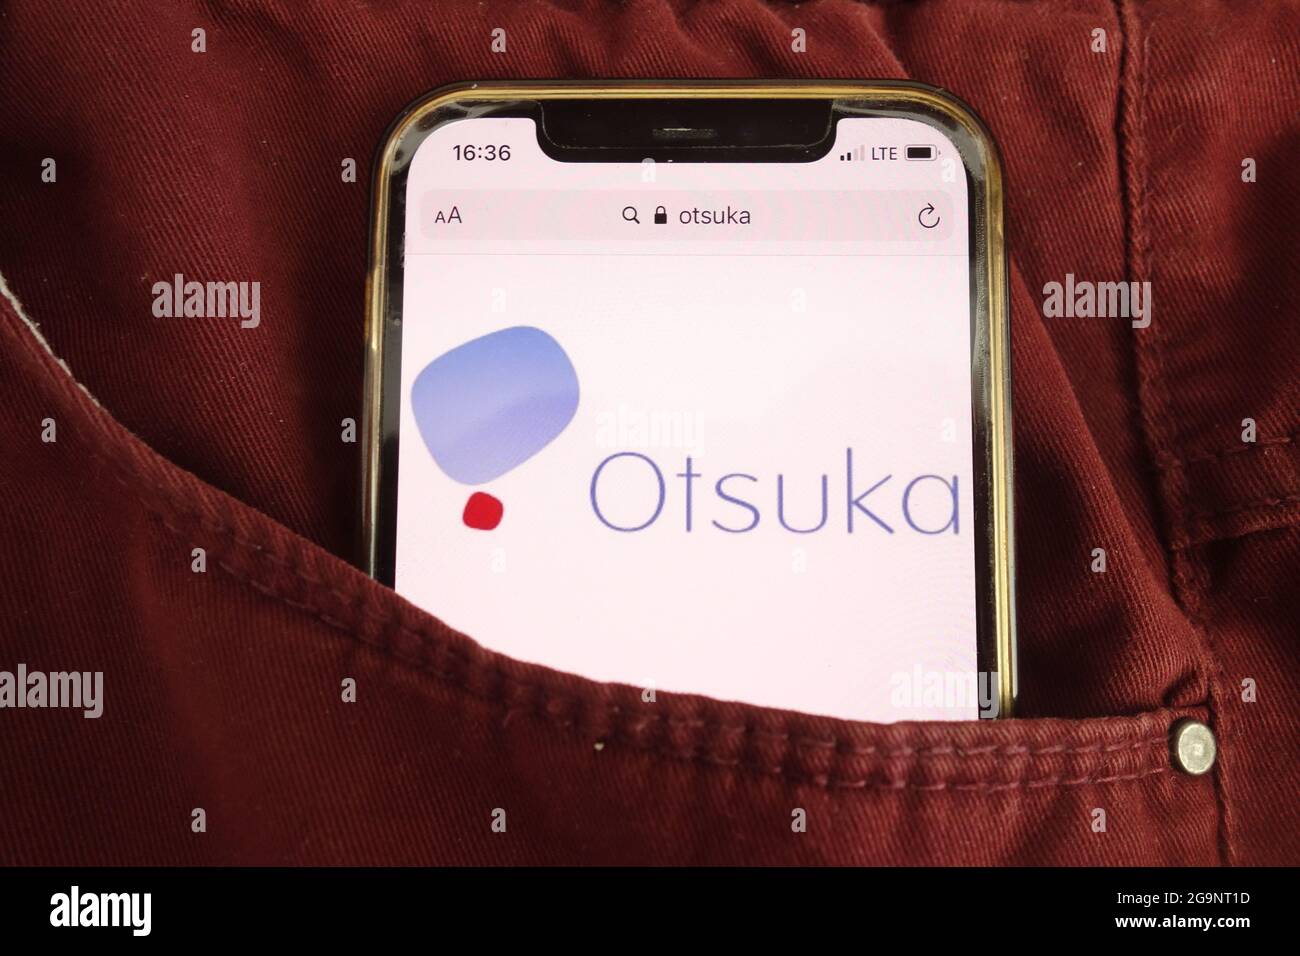 KONSKIE, POLAND - July 22, 2021: Otsuka Pharmaceutical Co Ltd logo displayed on mobile phone Stock Photo